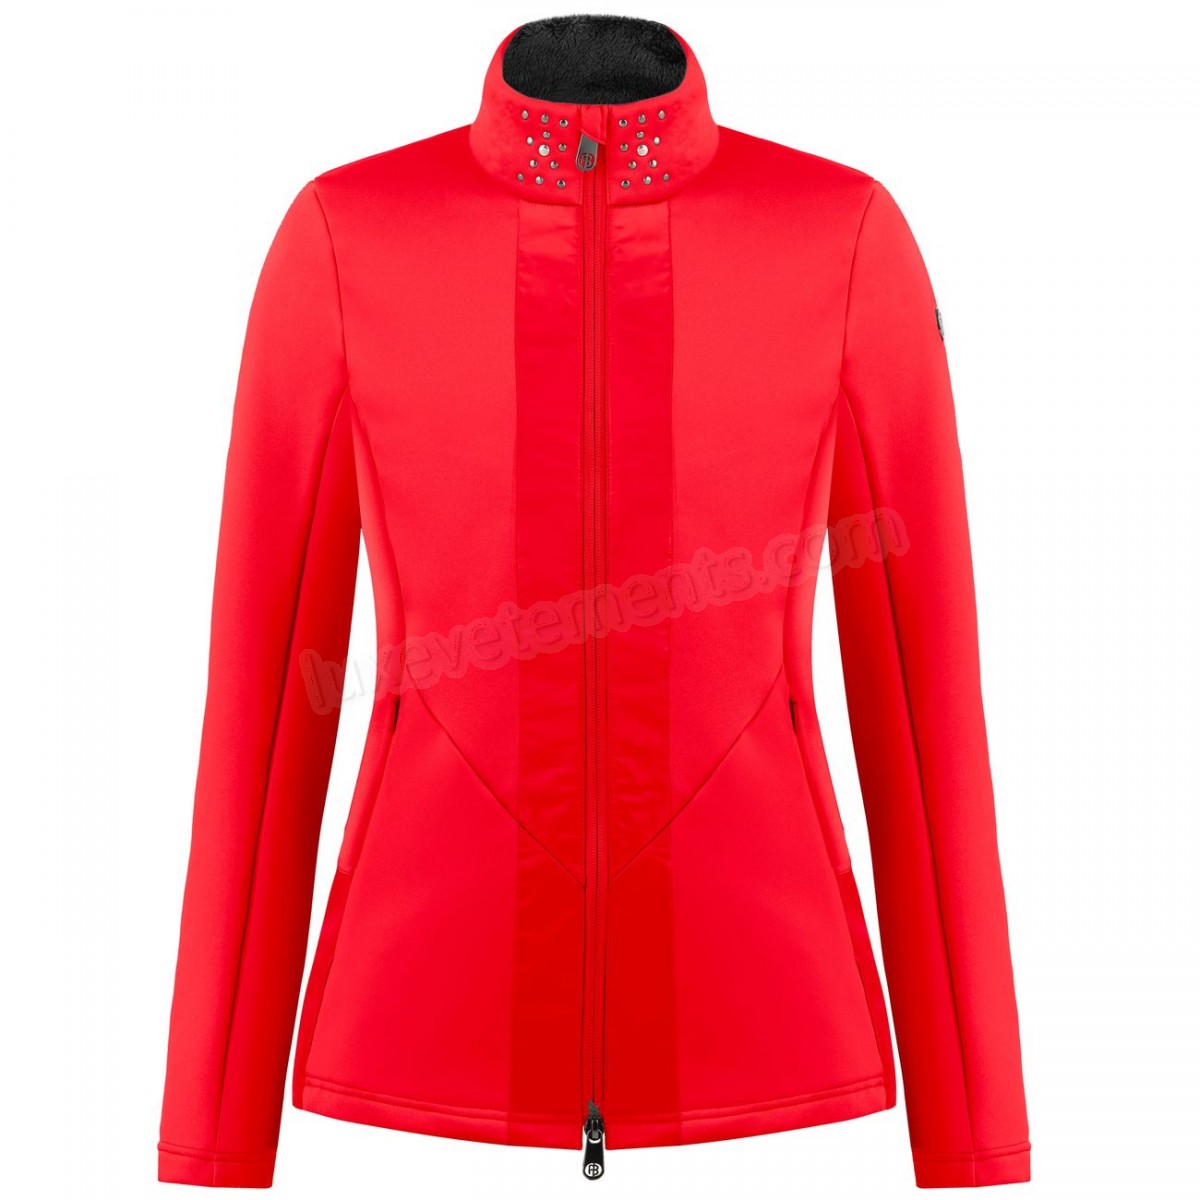 Poivre Blanc-Sports d'hiver femme POIVRE BLANC Veste En Polaire Poivre Blanc Hybrid Stretch Fleece Jacket 1702 Scarlet Red 5 Femme Vente en ligne - -0